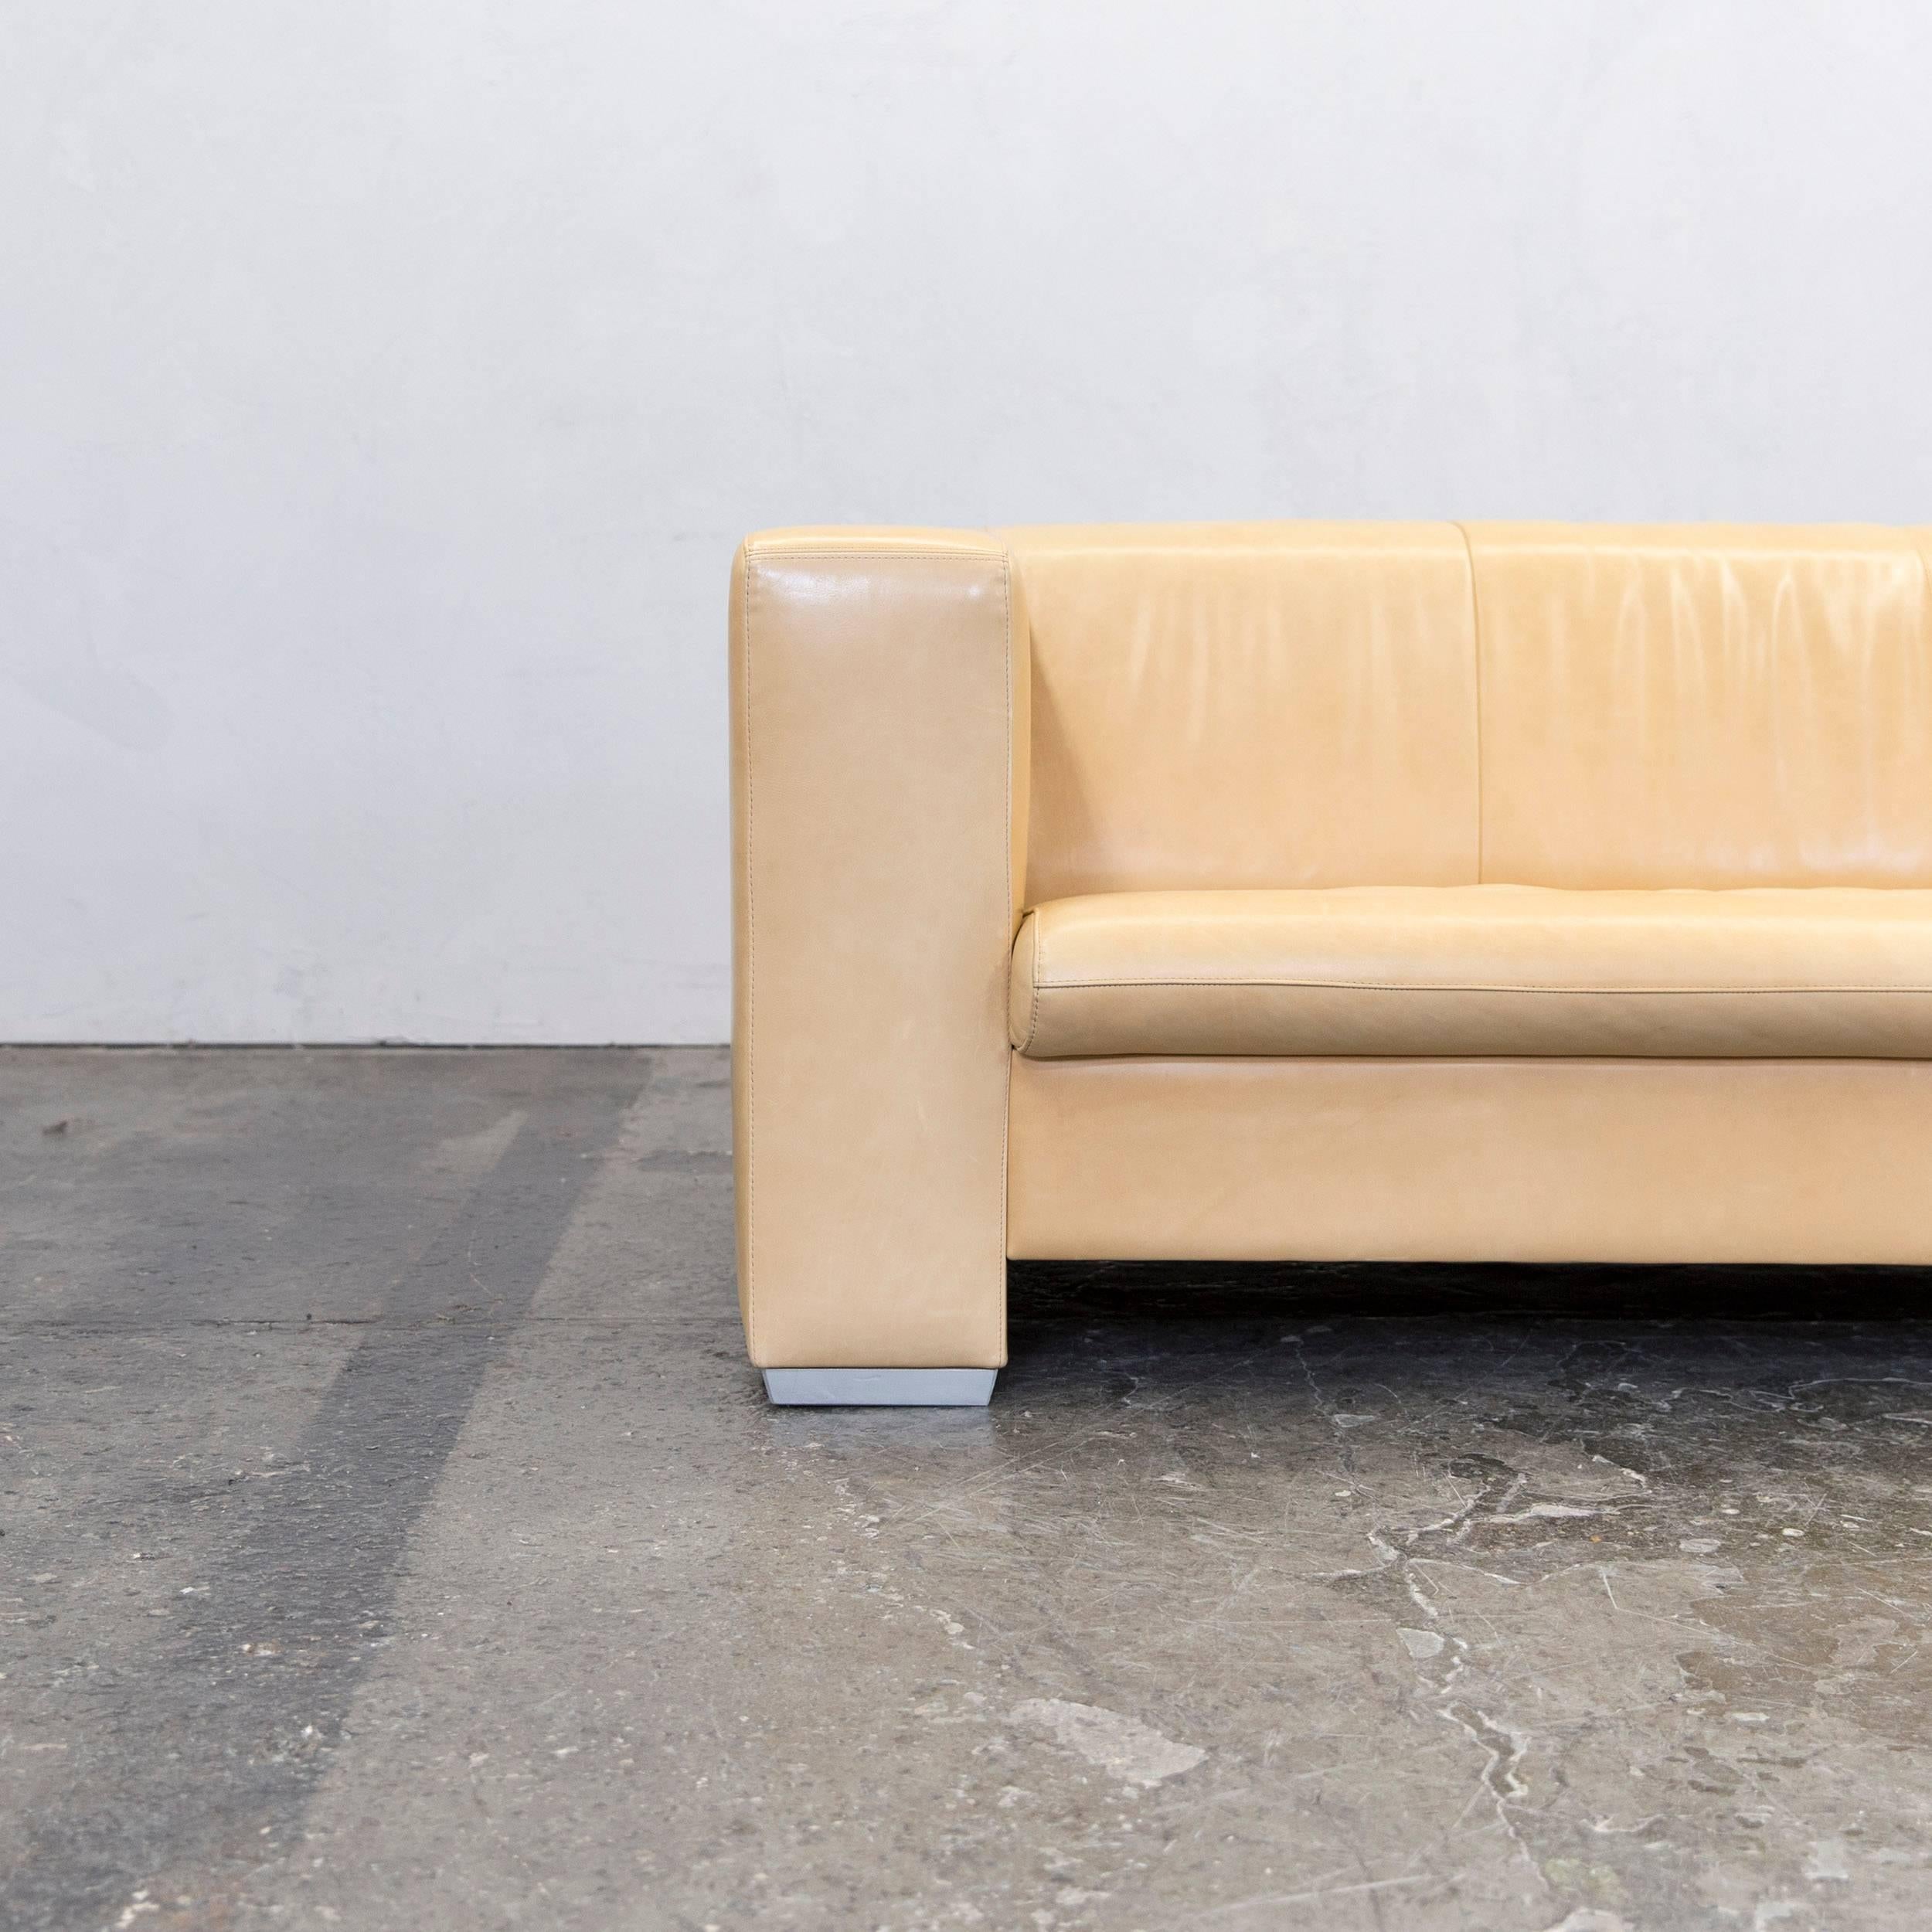 Crème beige colored original Machalke designer leather sofa in a minimalistic and modern design, made for pure comfort.